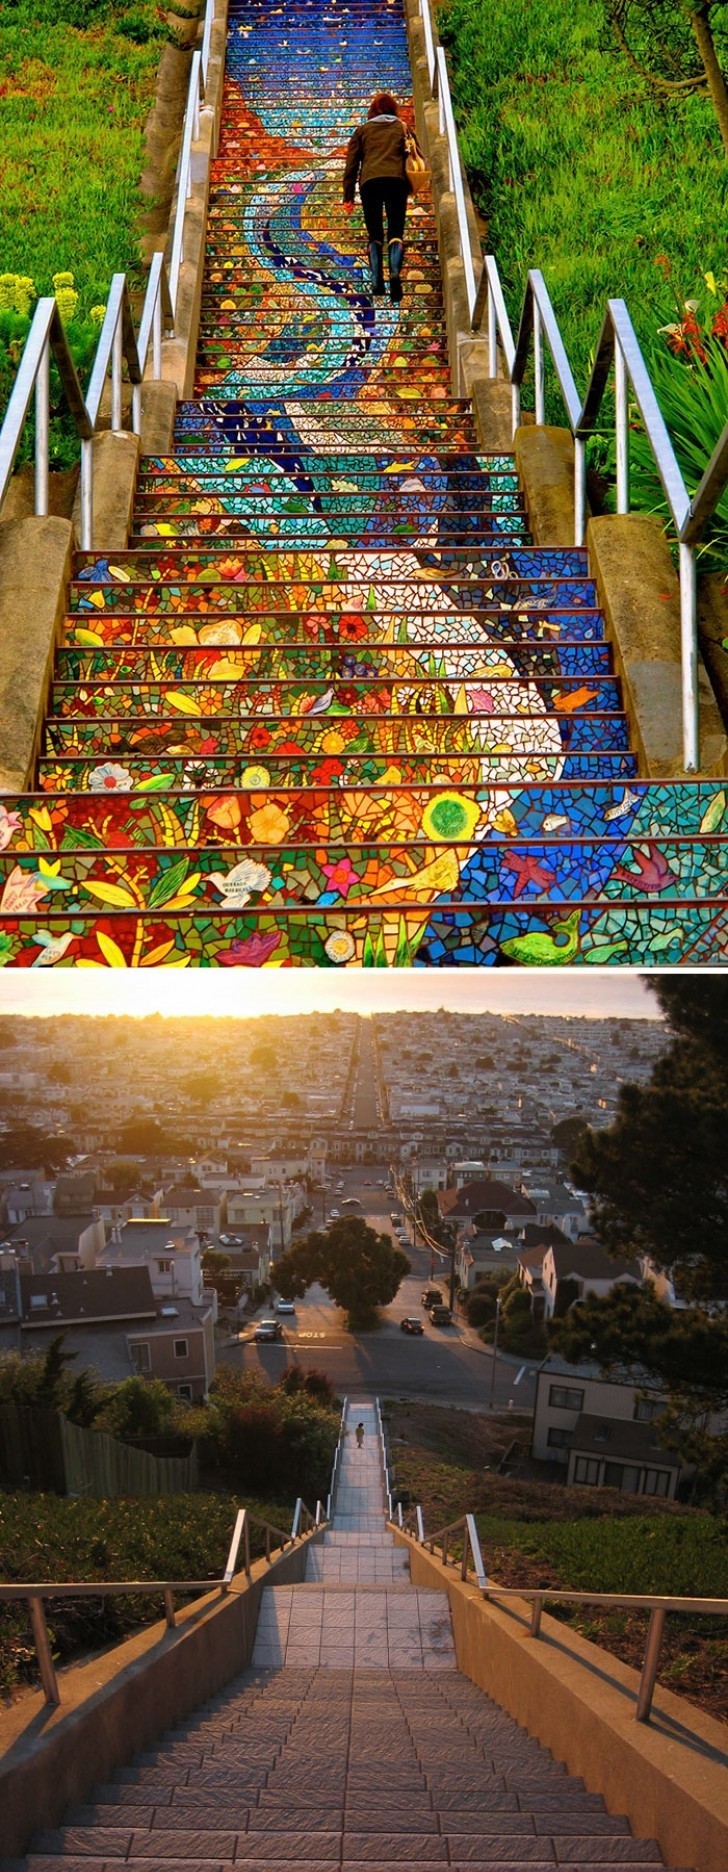 8. San Francisco (California) - "16th Avenue Tiled Steps"